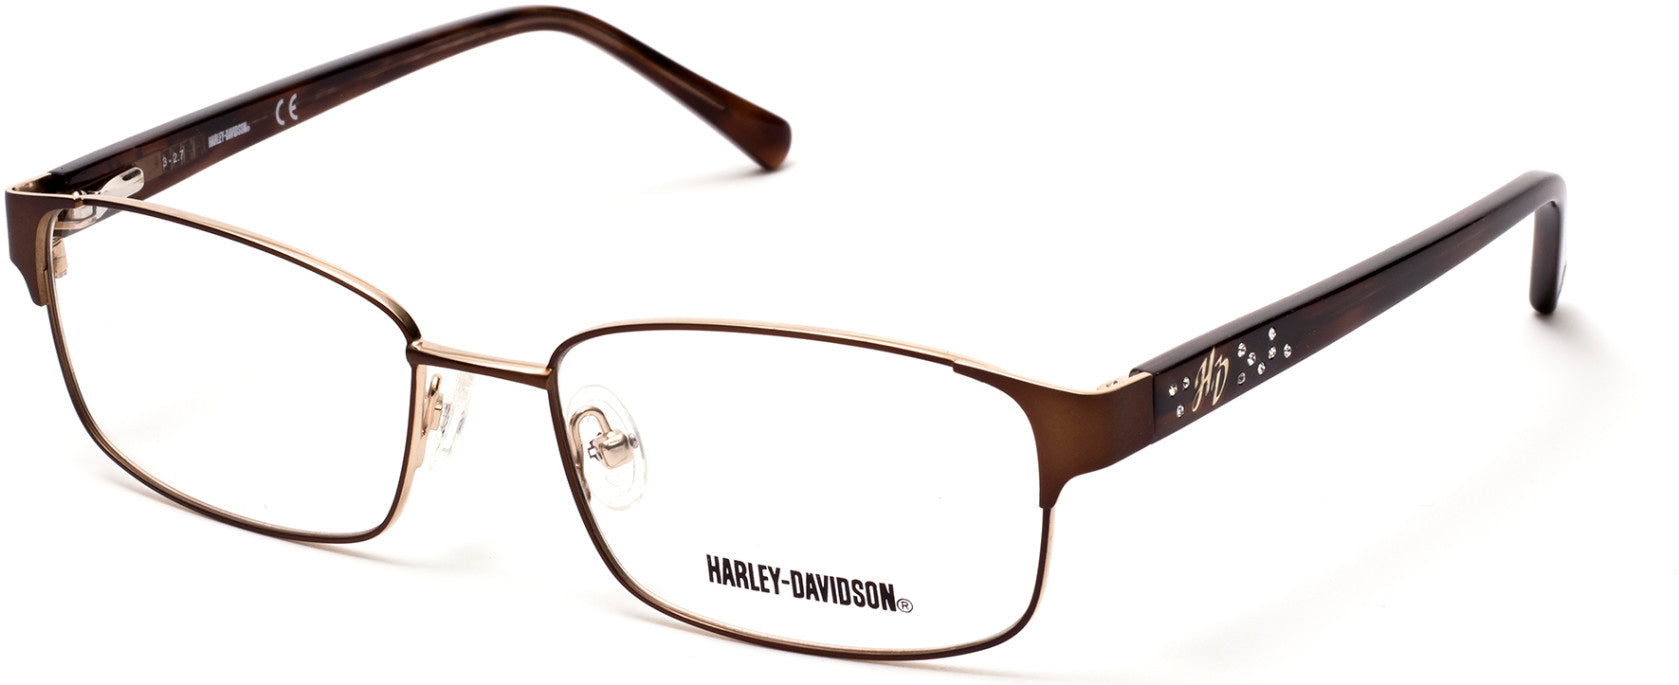 Harley-Davidson HD0543 Geometric Eyeglasses 049-049 - Matte Dark Brown